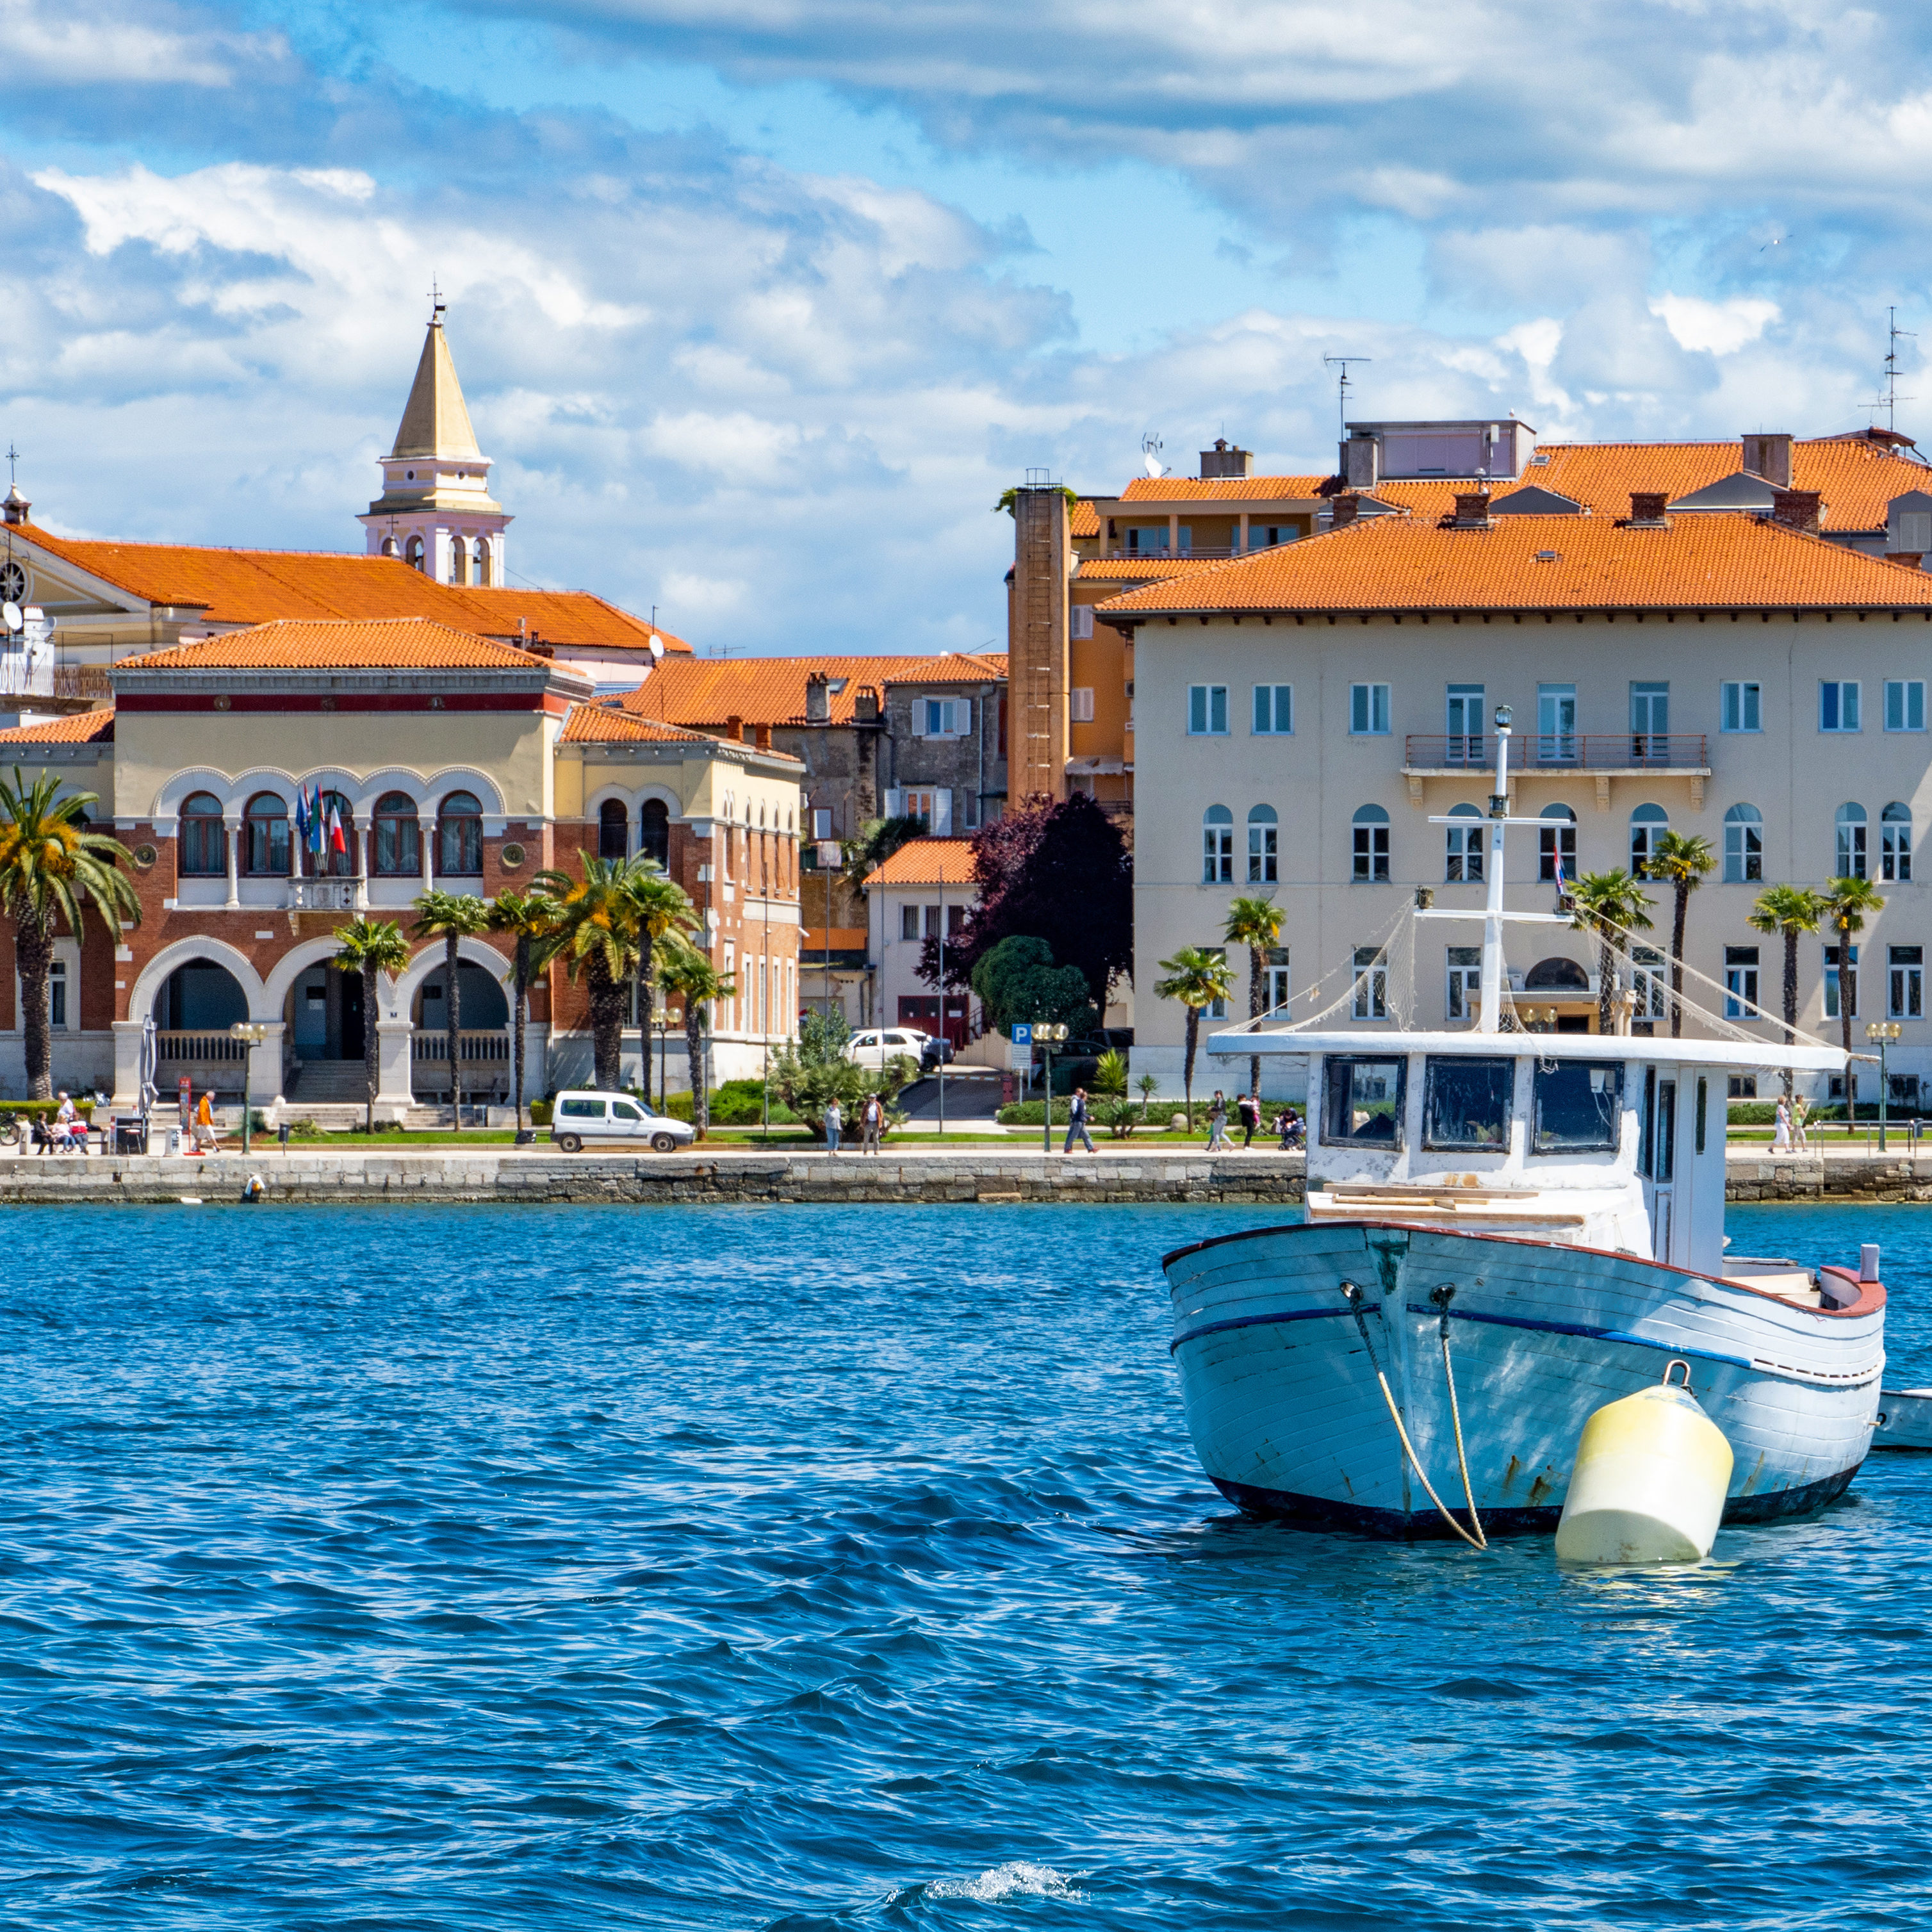 Hafen und Altstadt Porec, Istrien, Kroatien